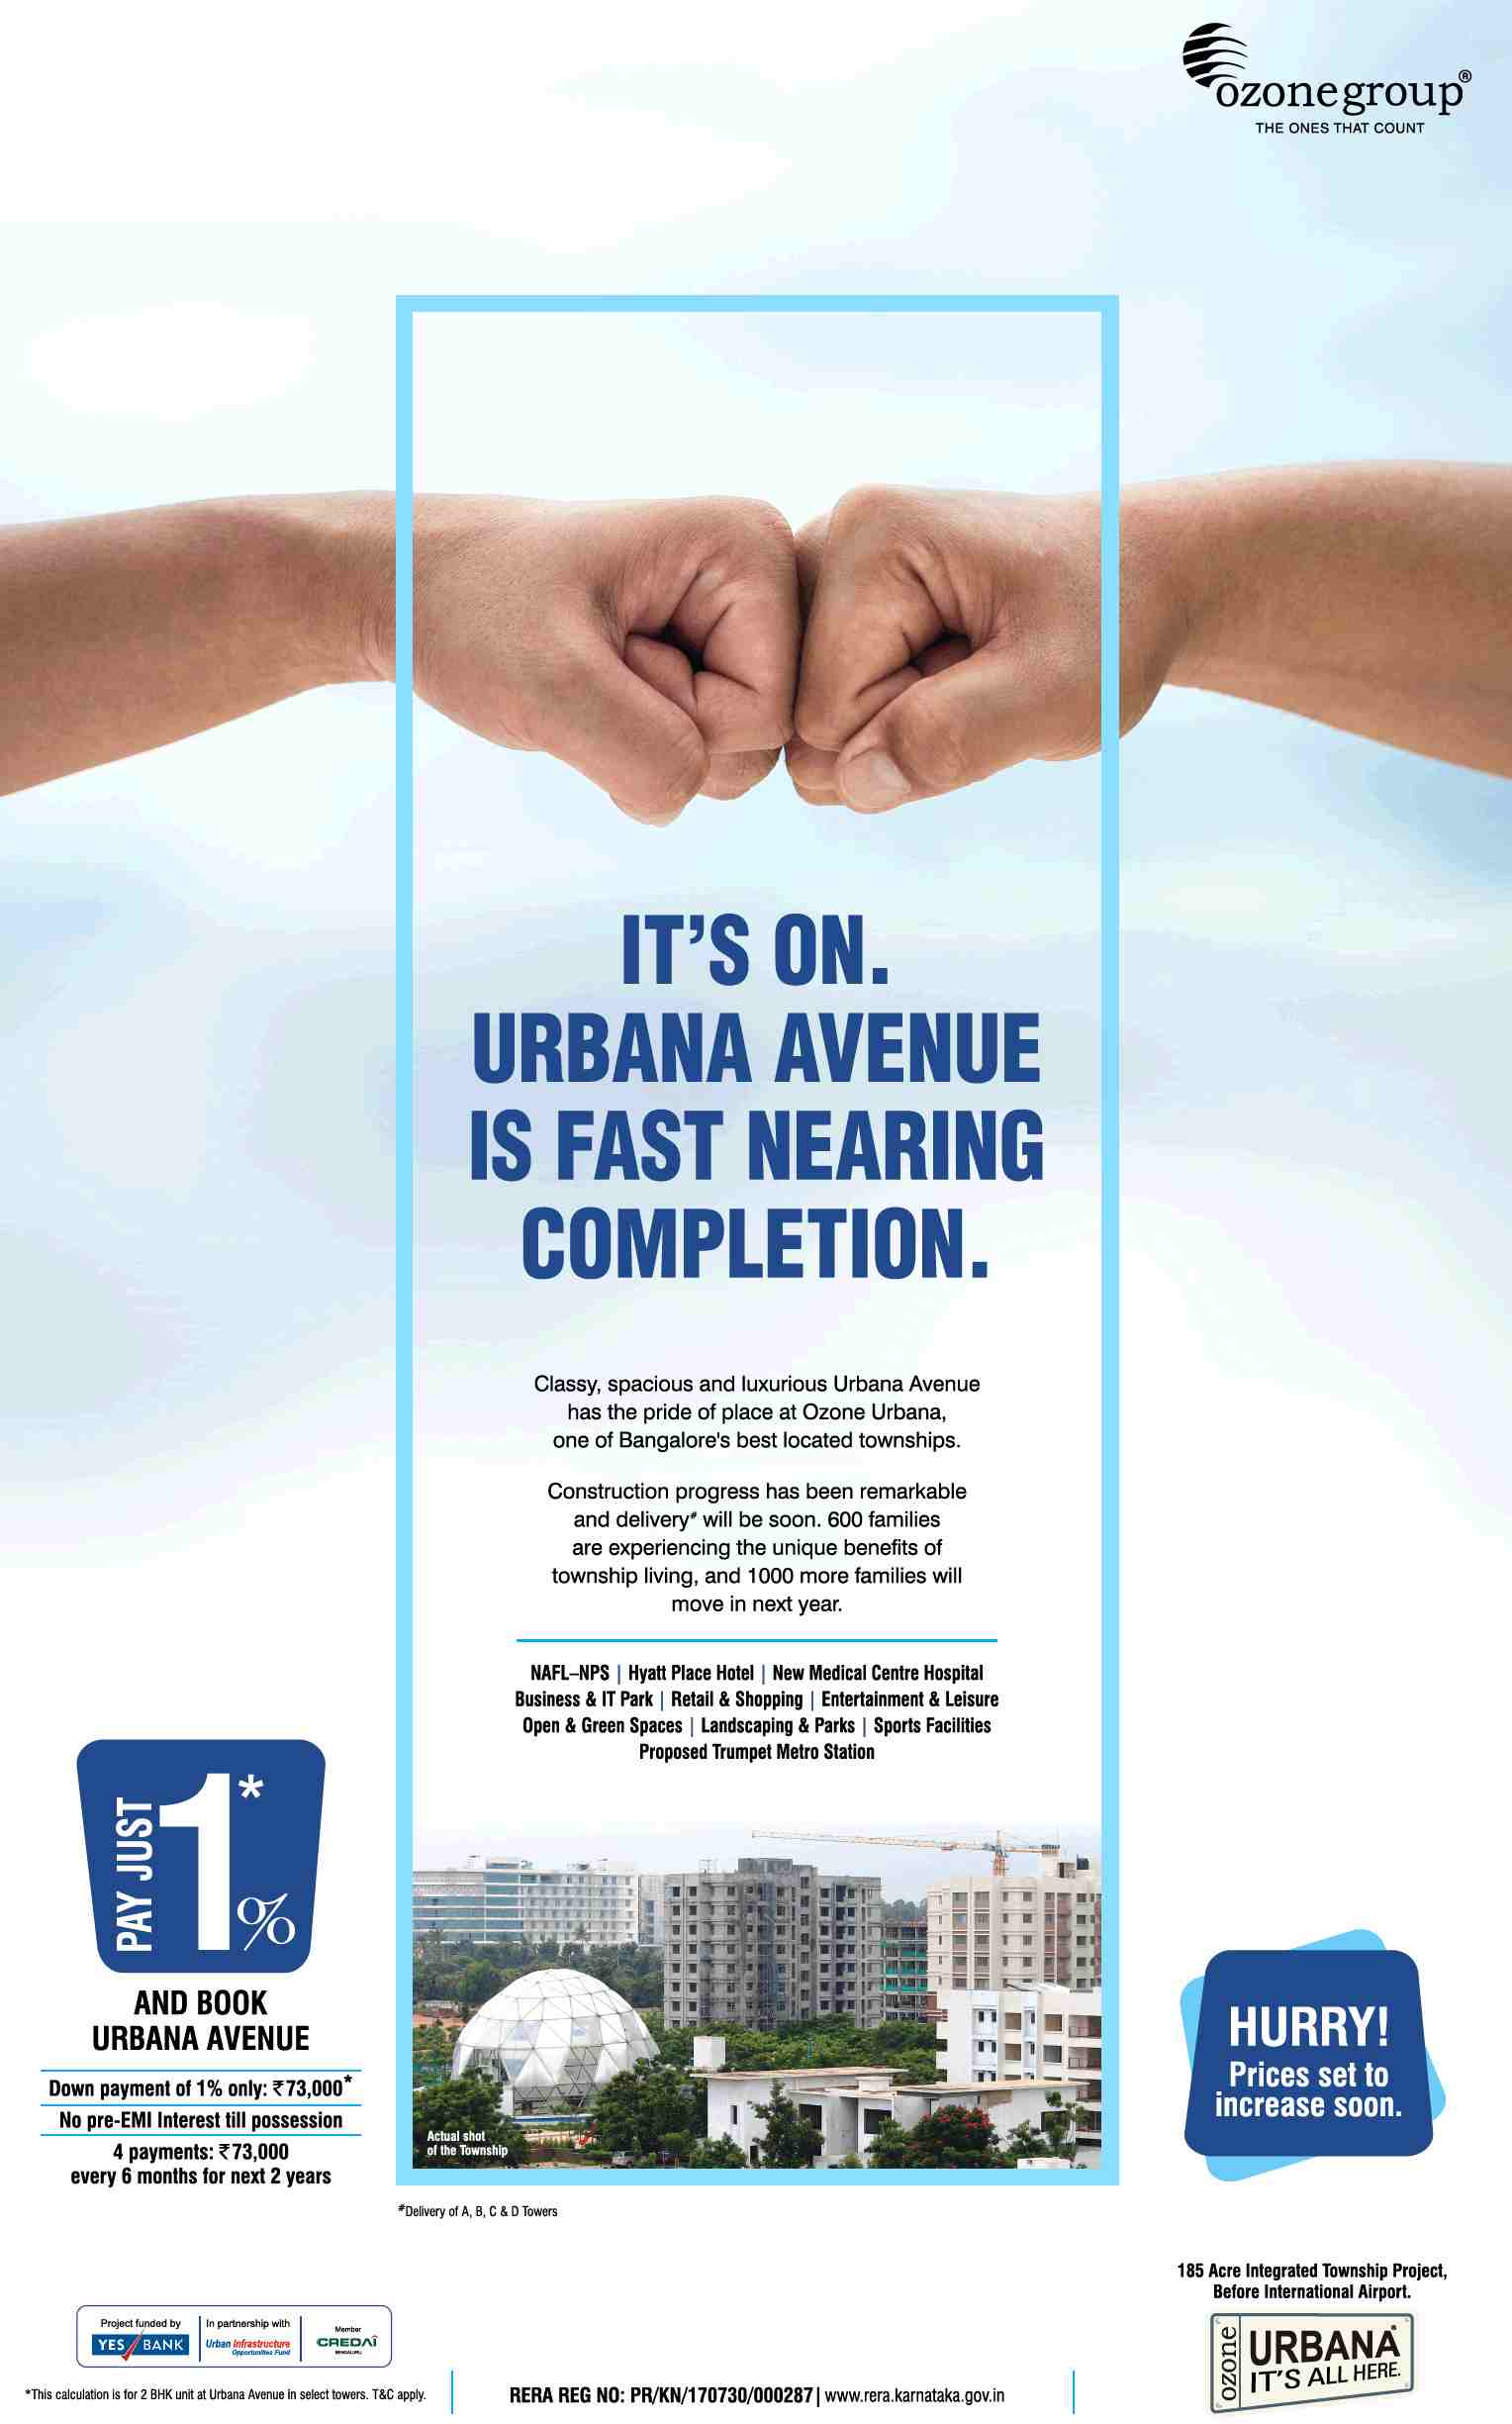 Pay no pre-EMI interest till possession at Ozone Urbana Avenue in Bangalore Update